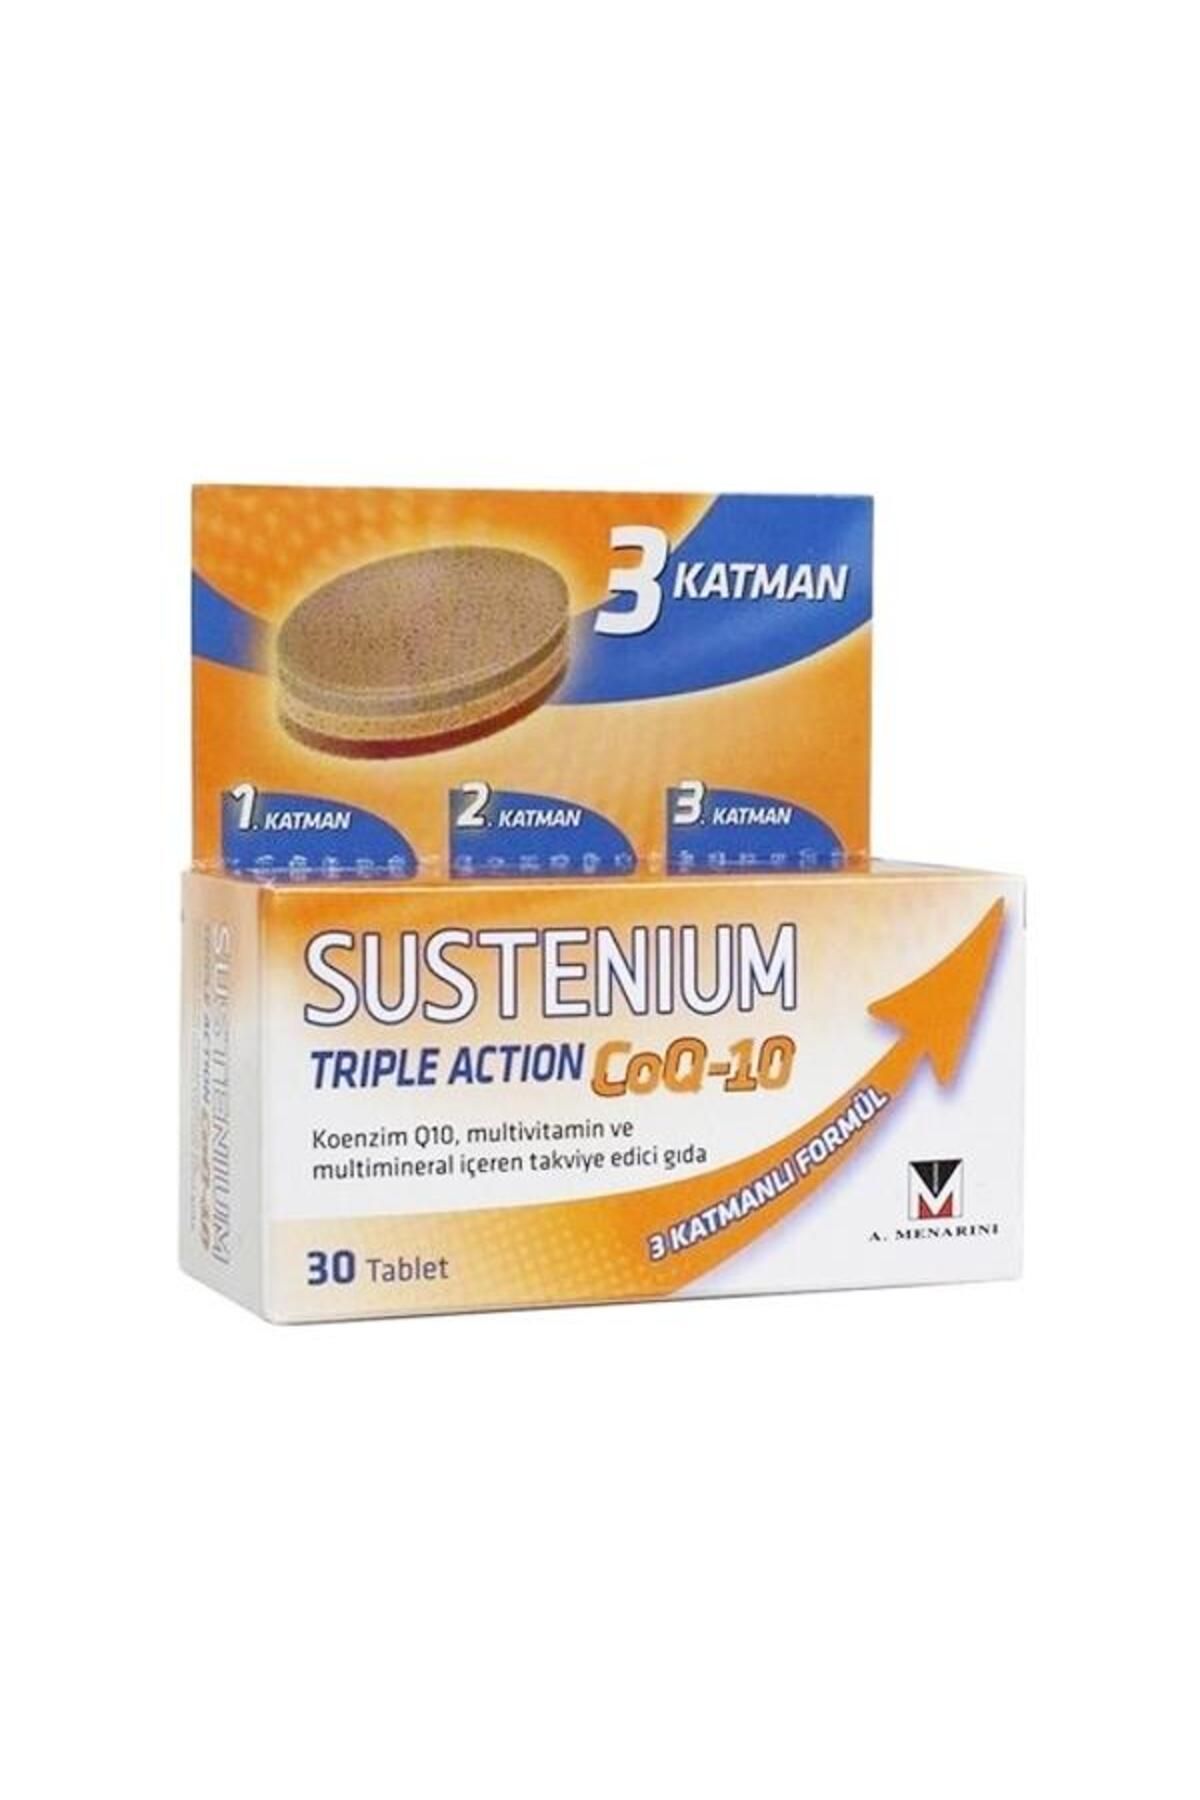 Sustenium Triple Action Coq-10 30 Tablet-skt:05/2026